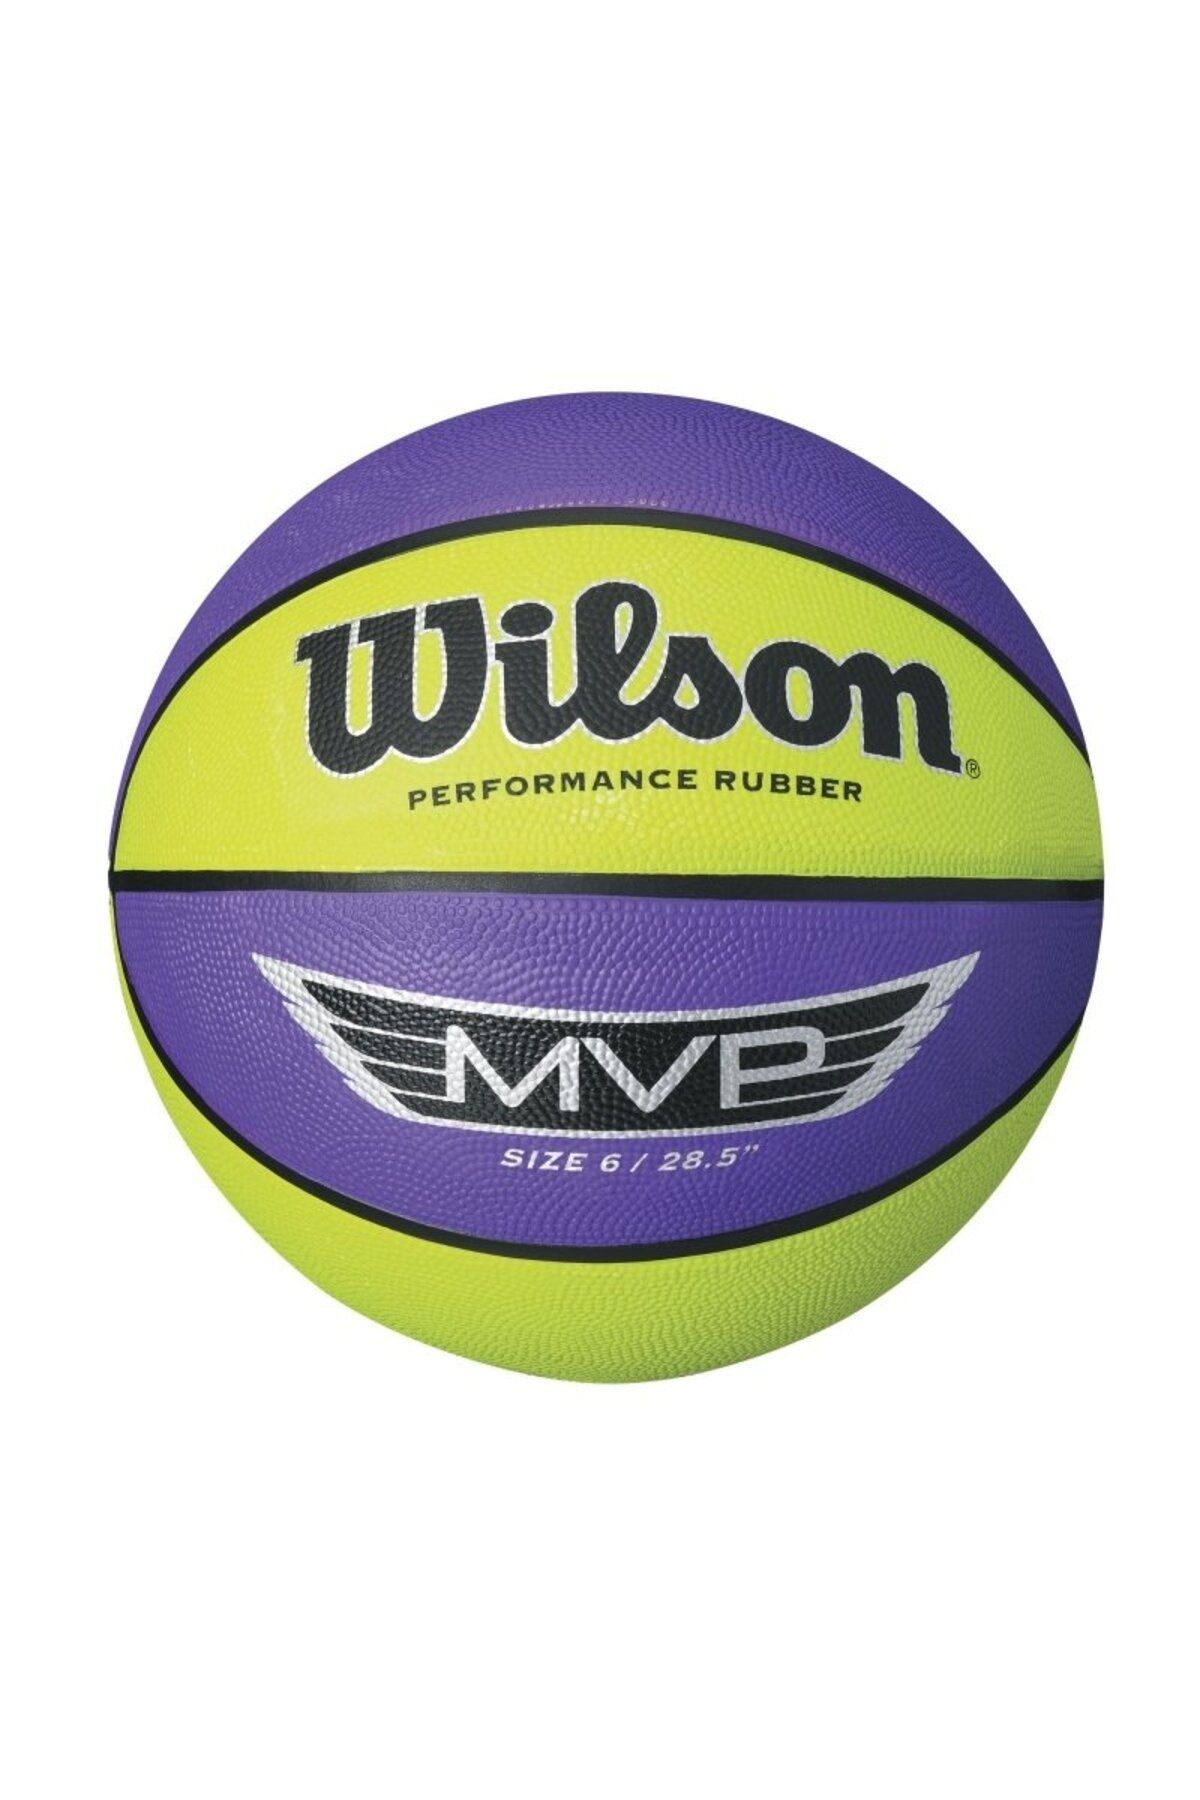 Wilson Mvp 295 Prlı Basketbol Topu Wtb9067xb07